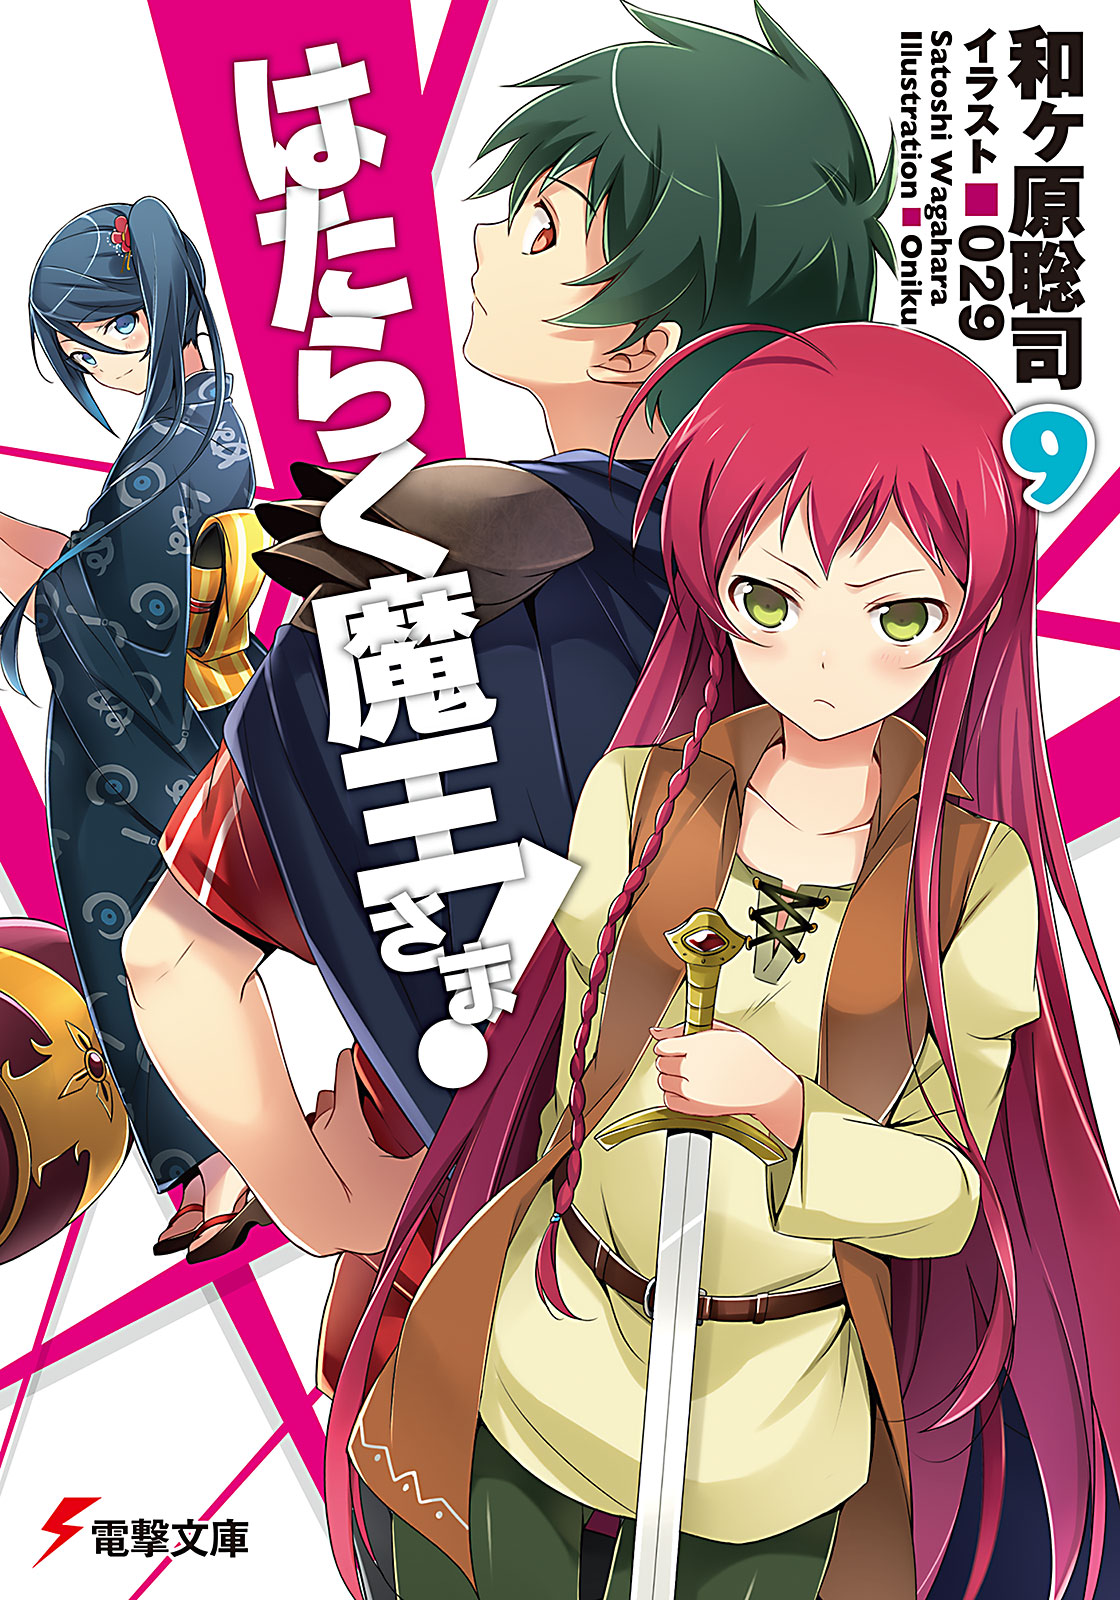 Light Novel Volume 9 | Hataraku Maou-sama! 